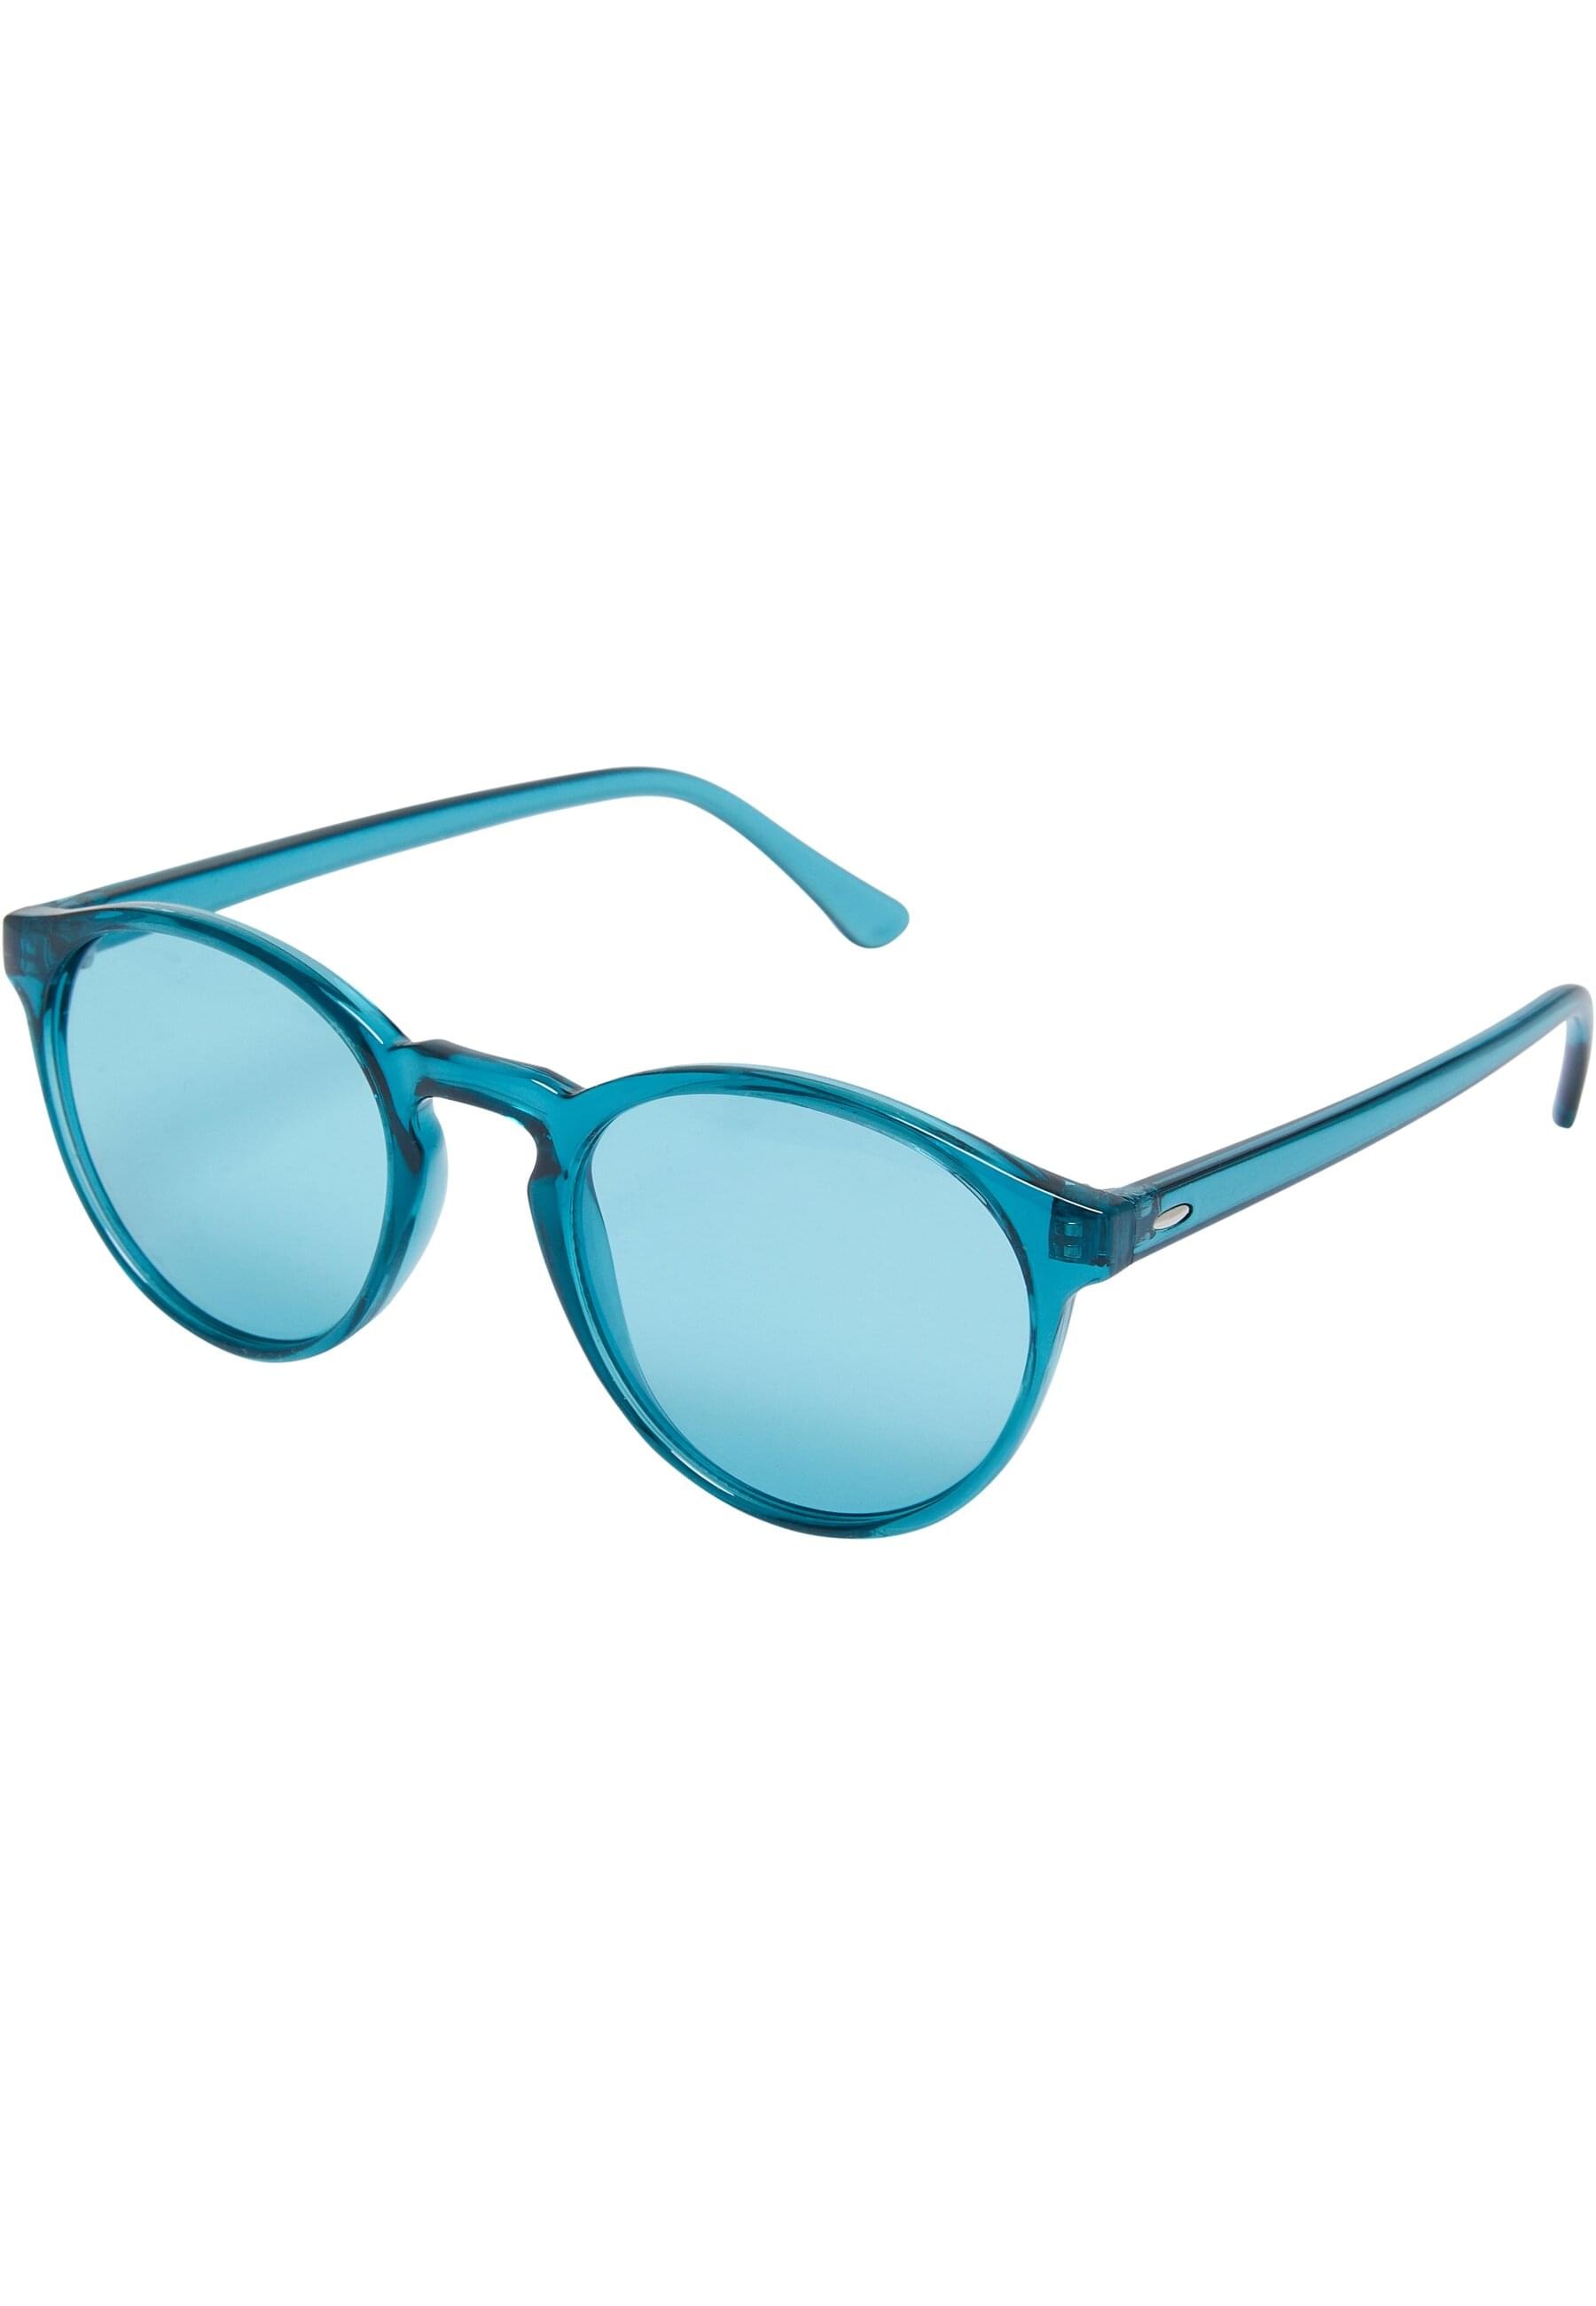 kaufen Sunglasses I\'m walking »Unisex | online 3-Pack« Sonnenbrille CLASSICS URBAN Cypress